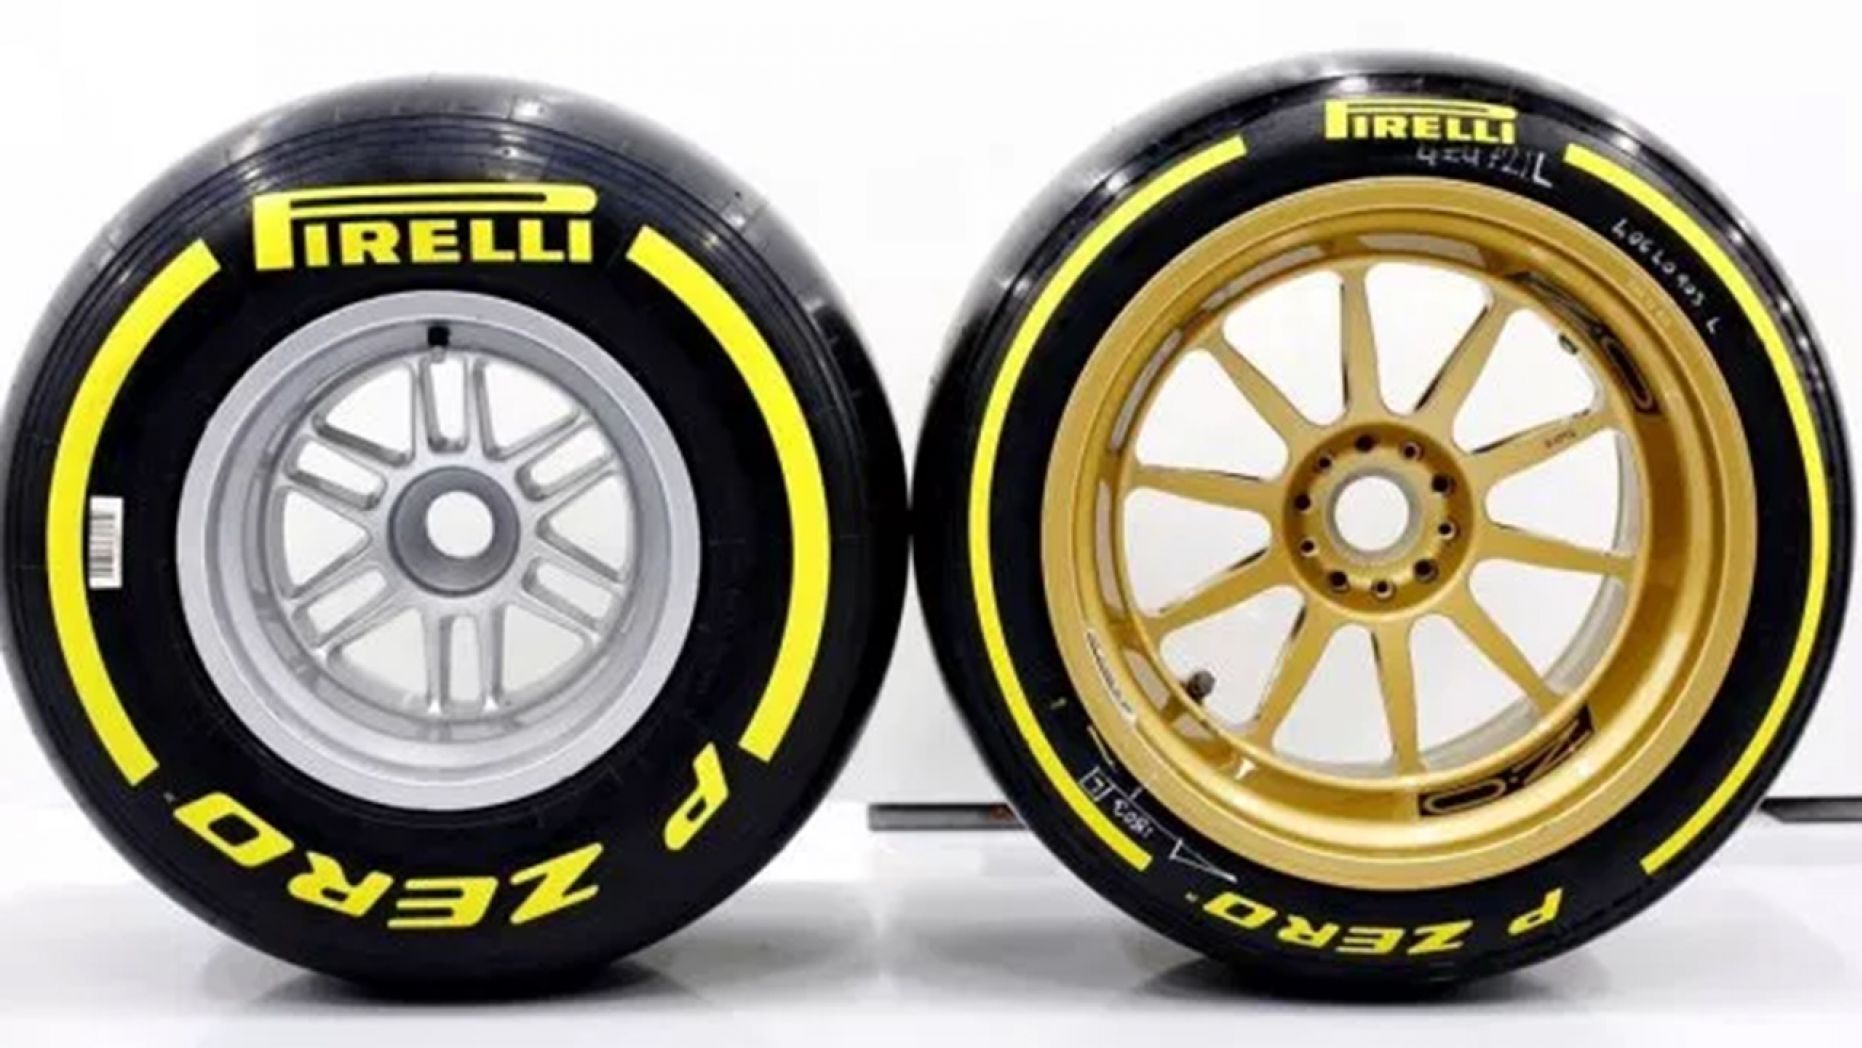 18" wheels (R) vs current 13"